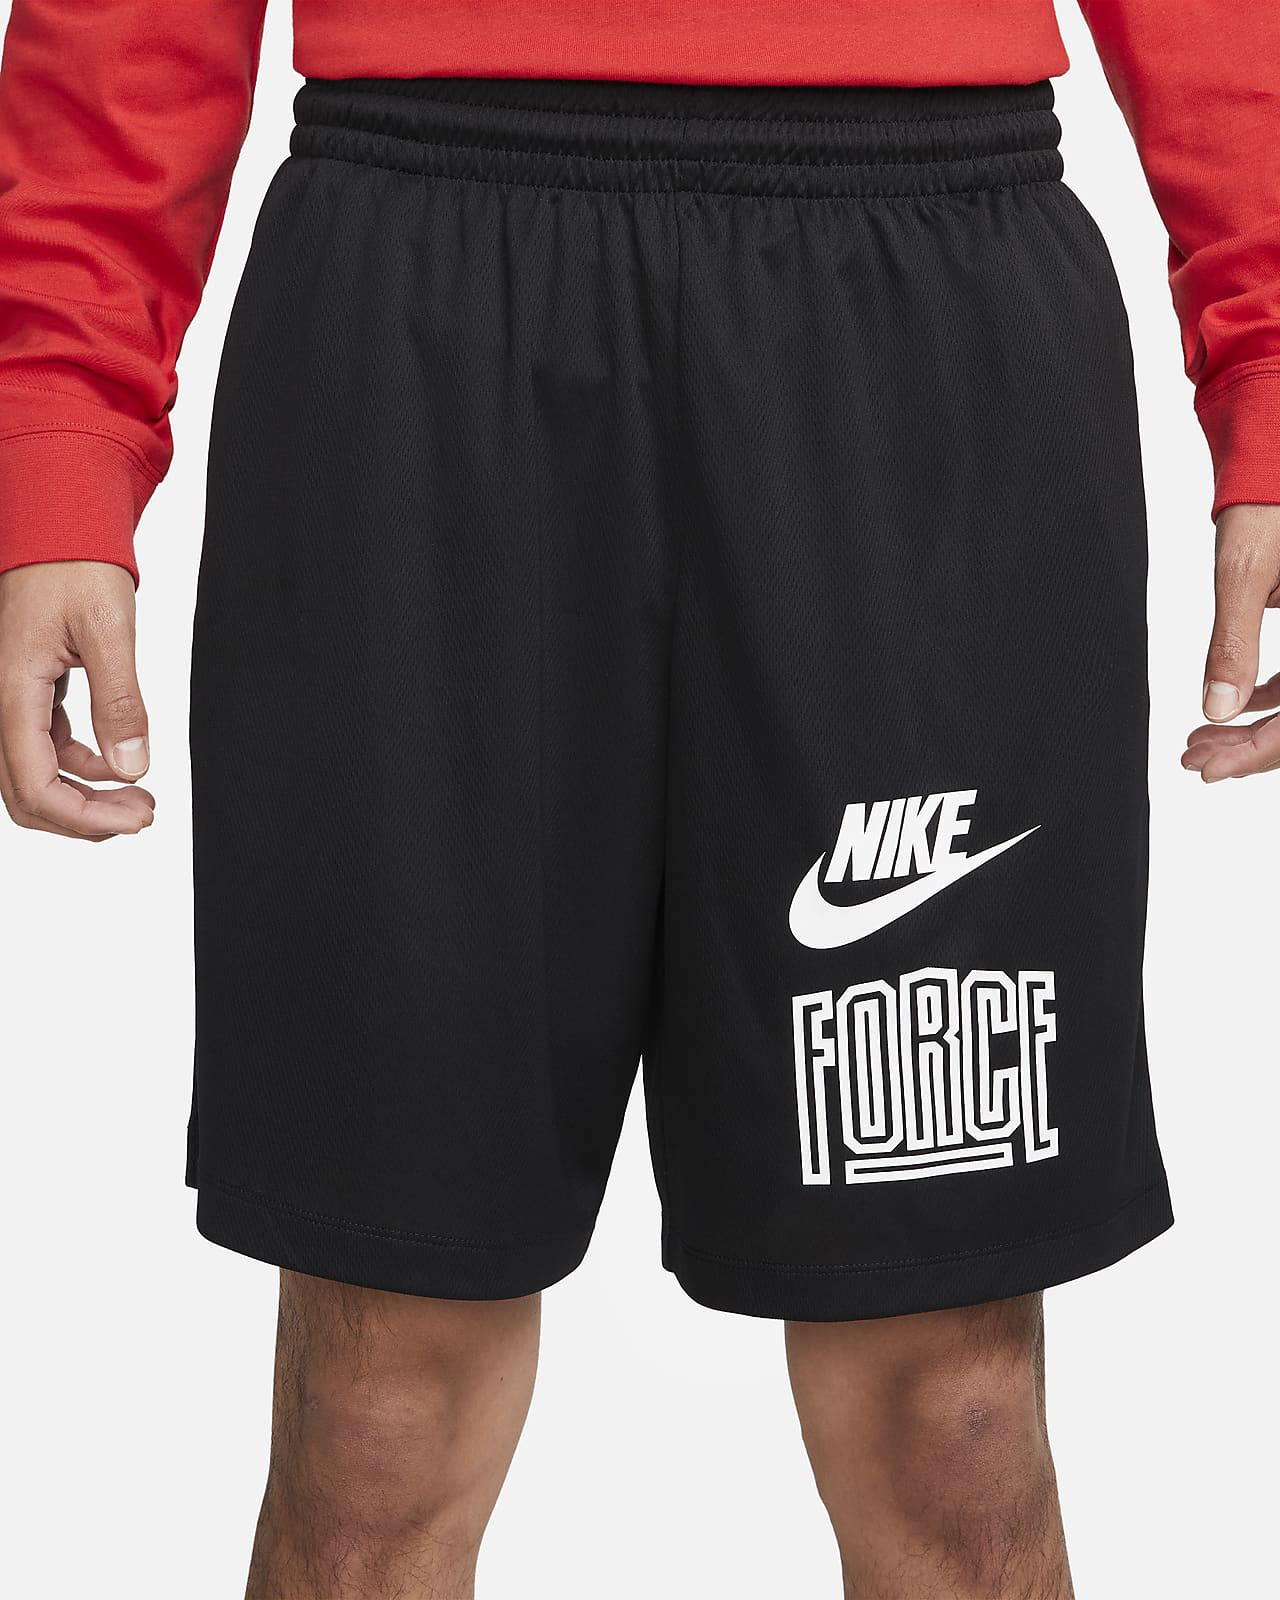 Nike Dri-FIT 5 Men's Basketball Shorts. ID